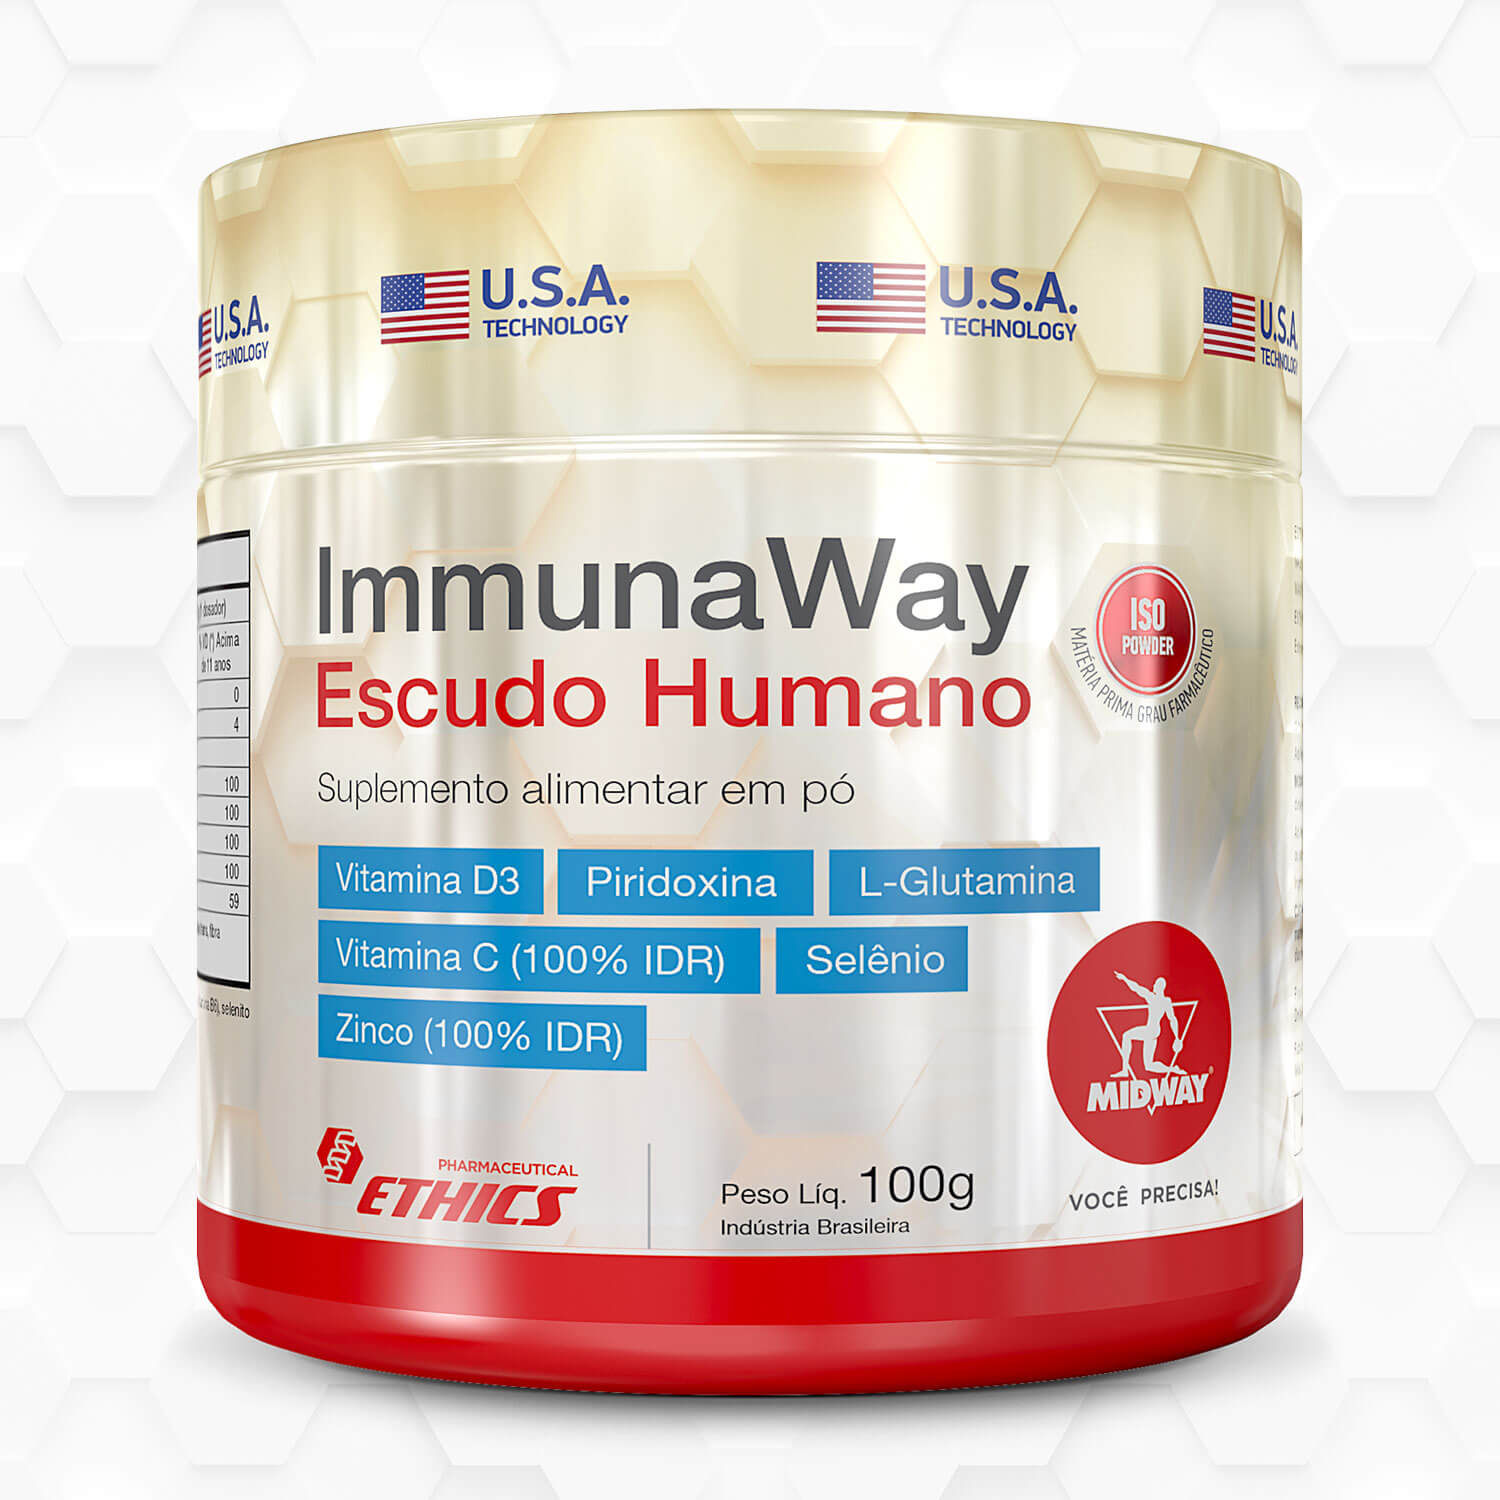 KIT IMMUNITY: 1 Kit Mix Proteico 400g + 1 Immuna Way Escudo Humano 100g + 2 Vit Glaft 30 cápsulas + GRÁTIS 1 Coqueteleira Midway